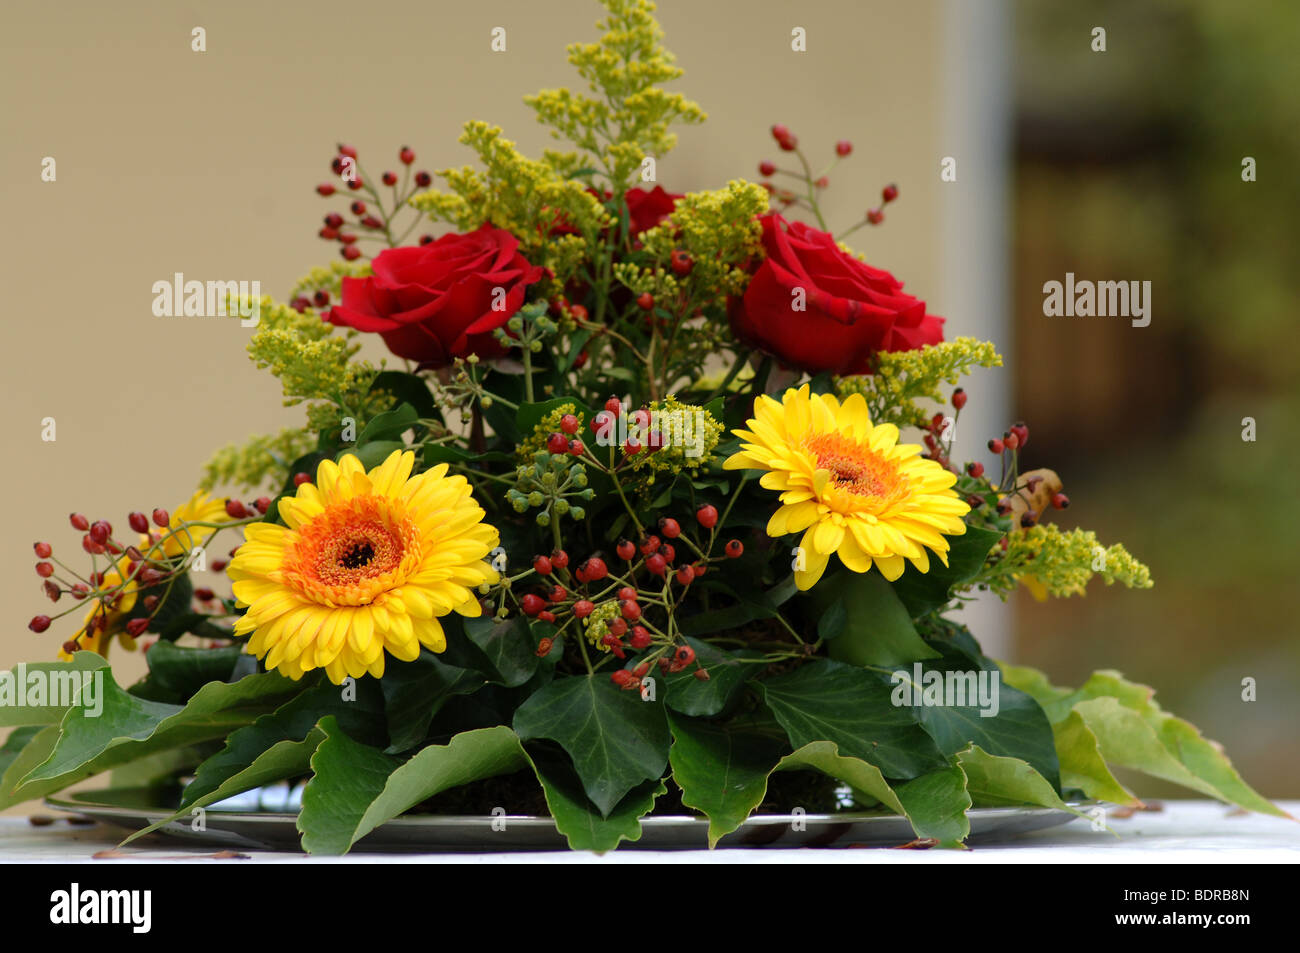 Blumengesteck Gerbera mit und Rosen, arrangement de fleurs roses et gerberas avec Banque D'Images